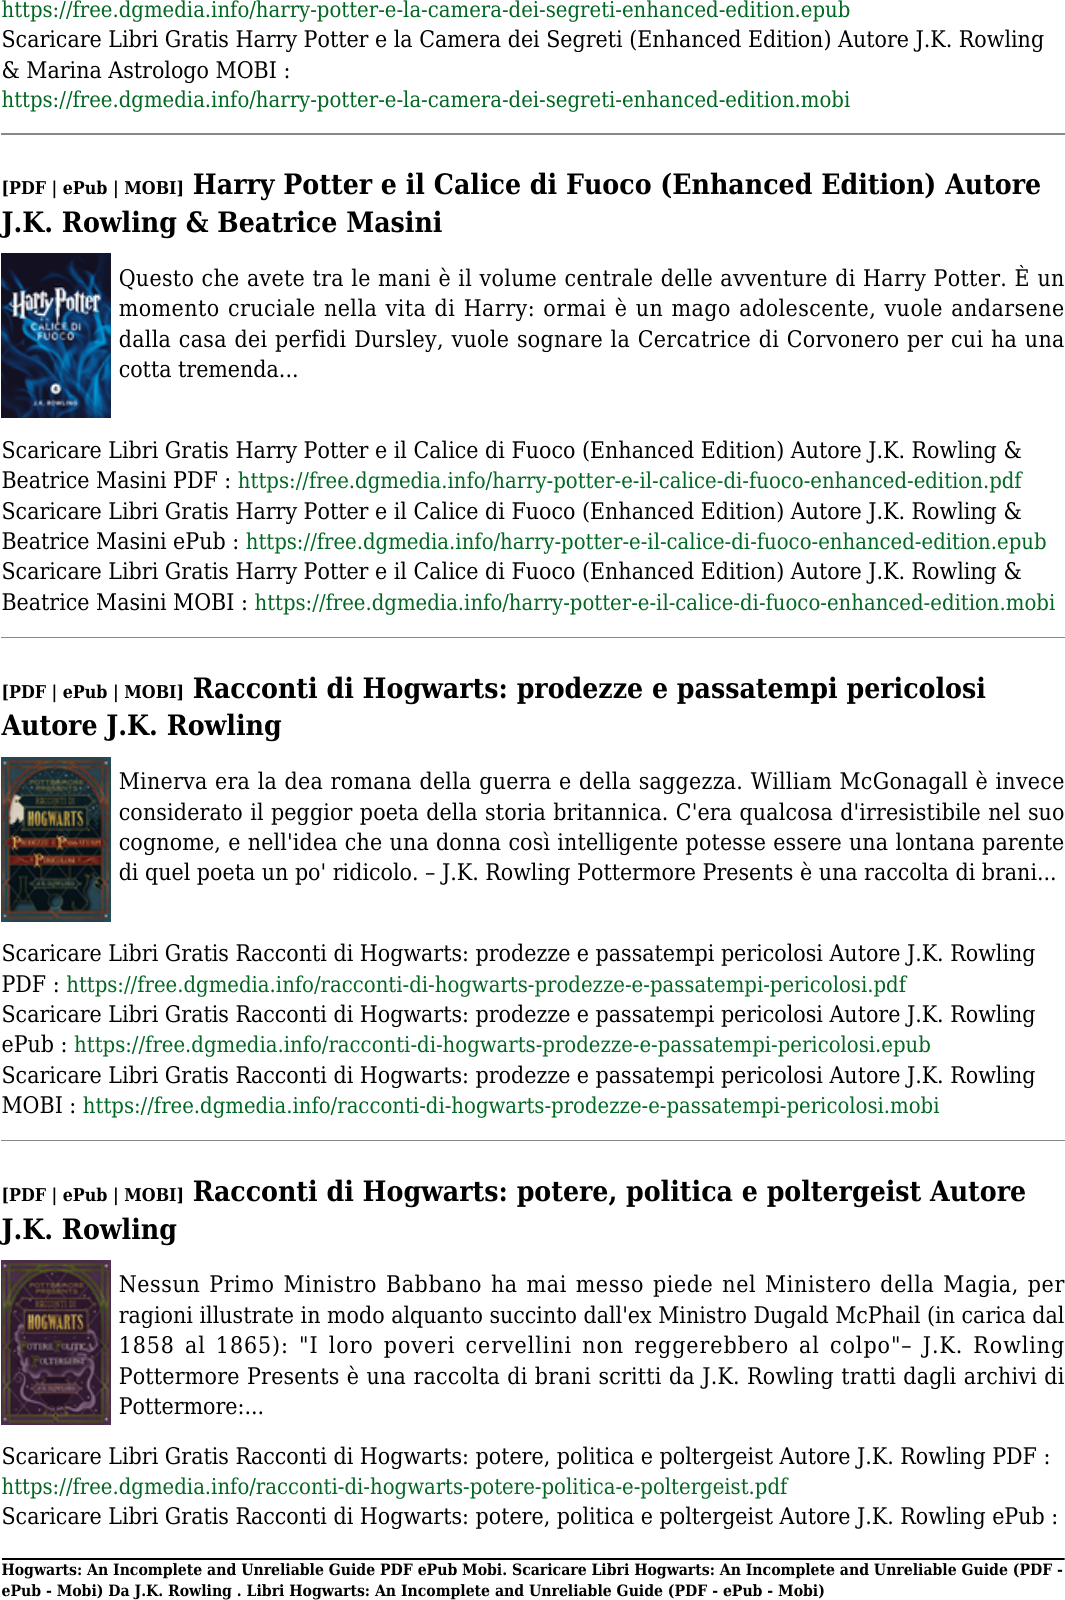 Scaricare Libri Gratis Hogwarts An In And Unreliable Guide Di J K Rowling Pdf Epub Mobi Hogwarts Rowling